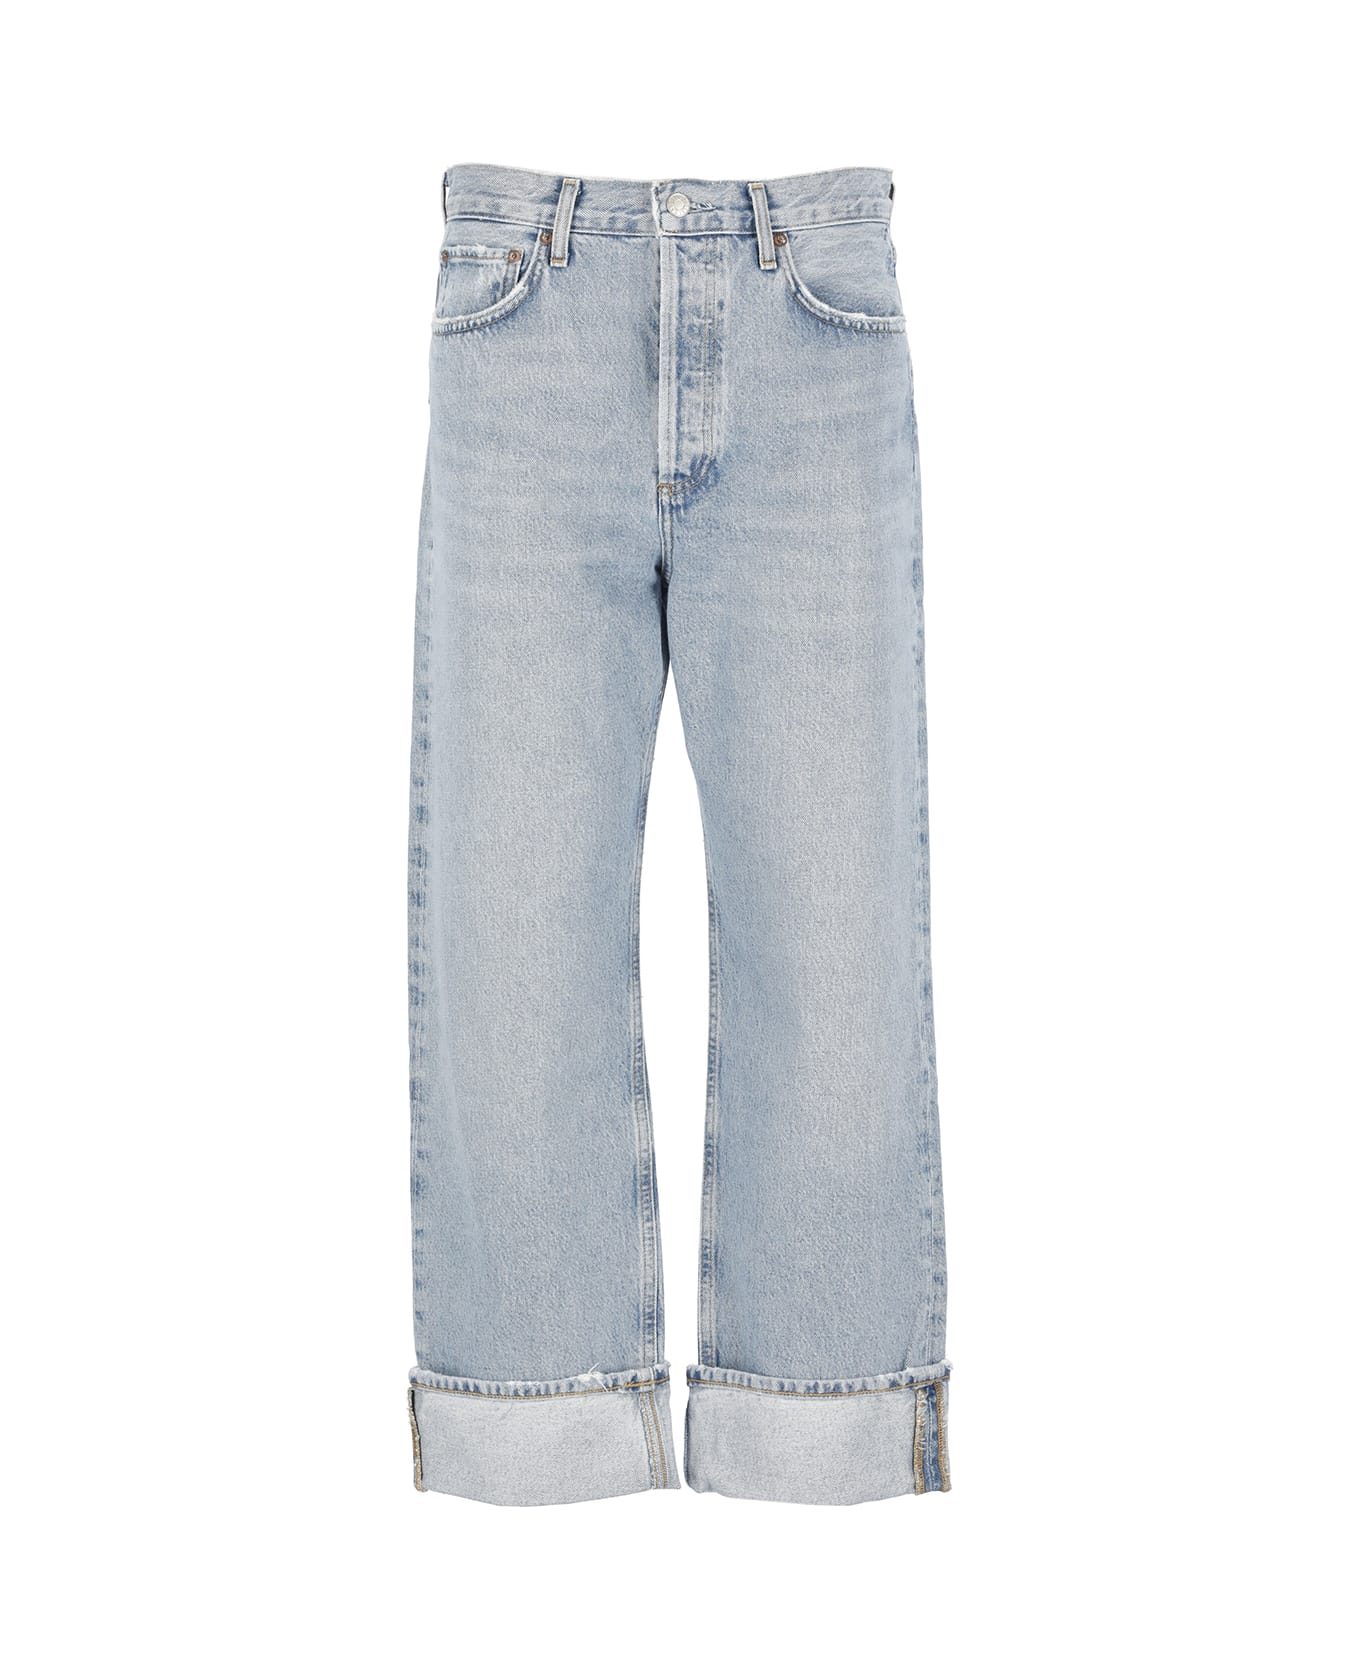 AGOLDE Fran Low Jeans - BLUE